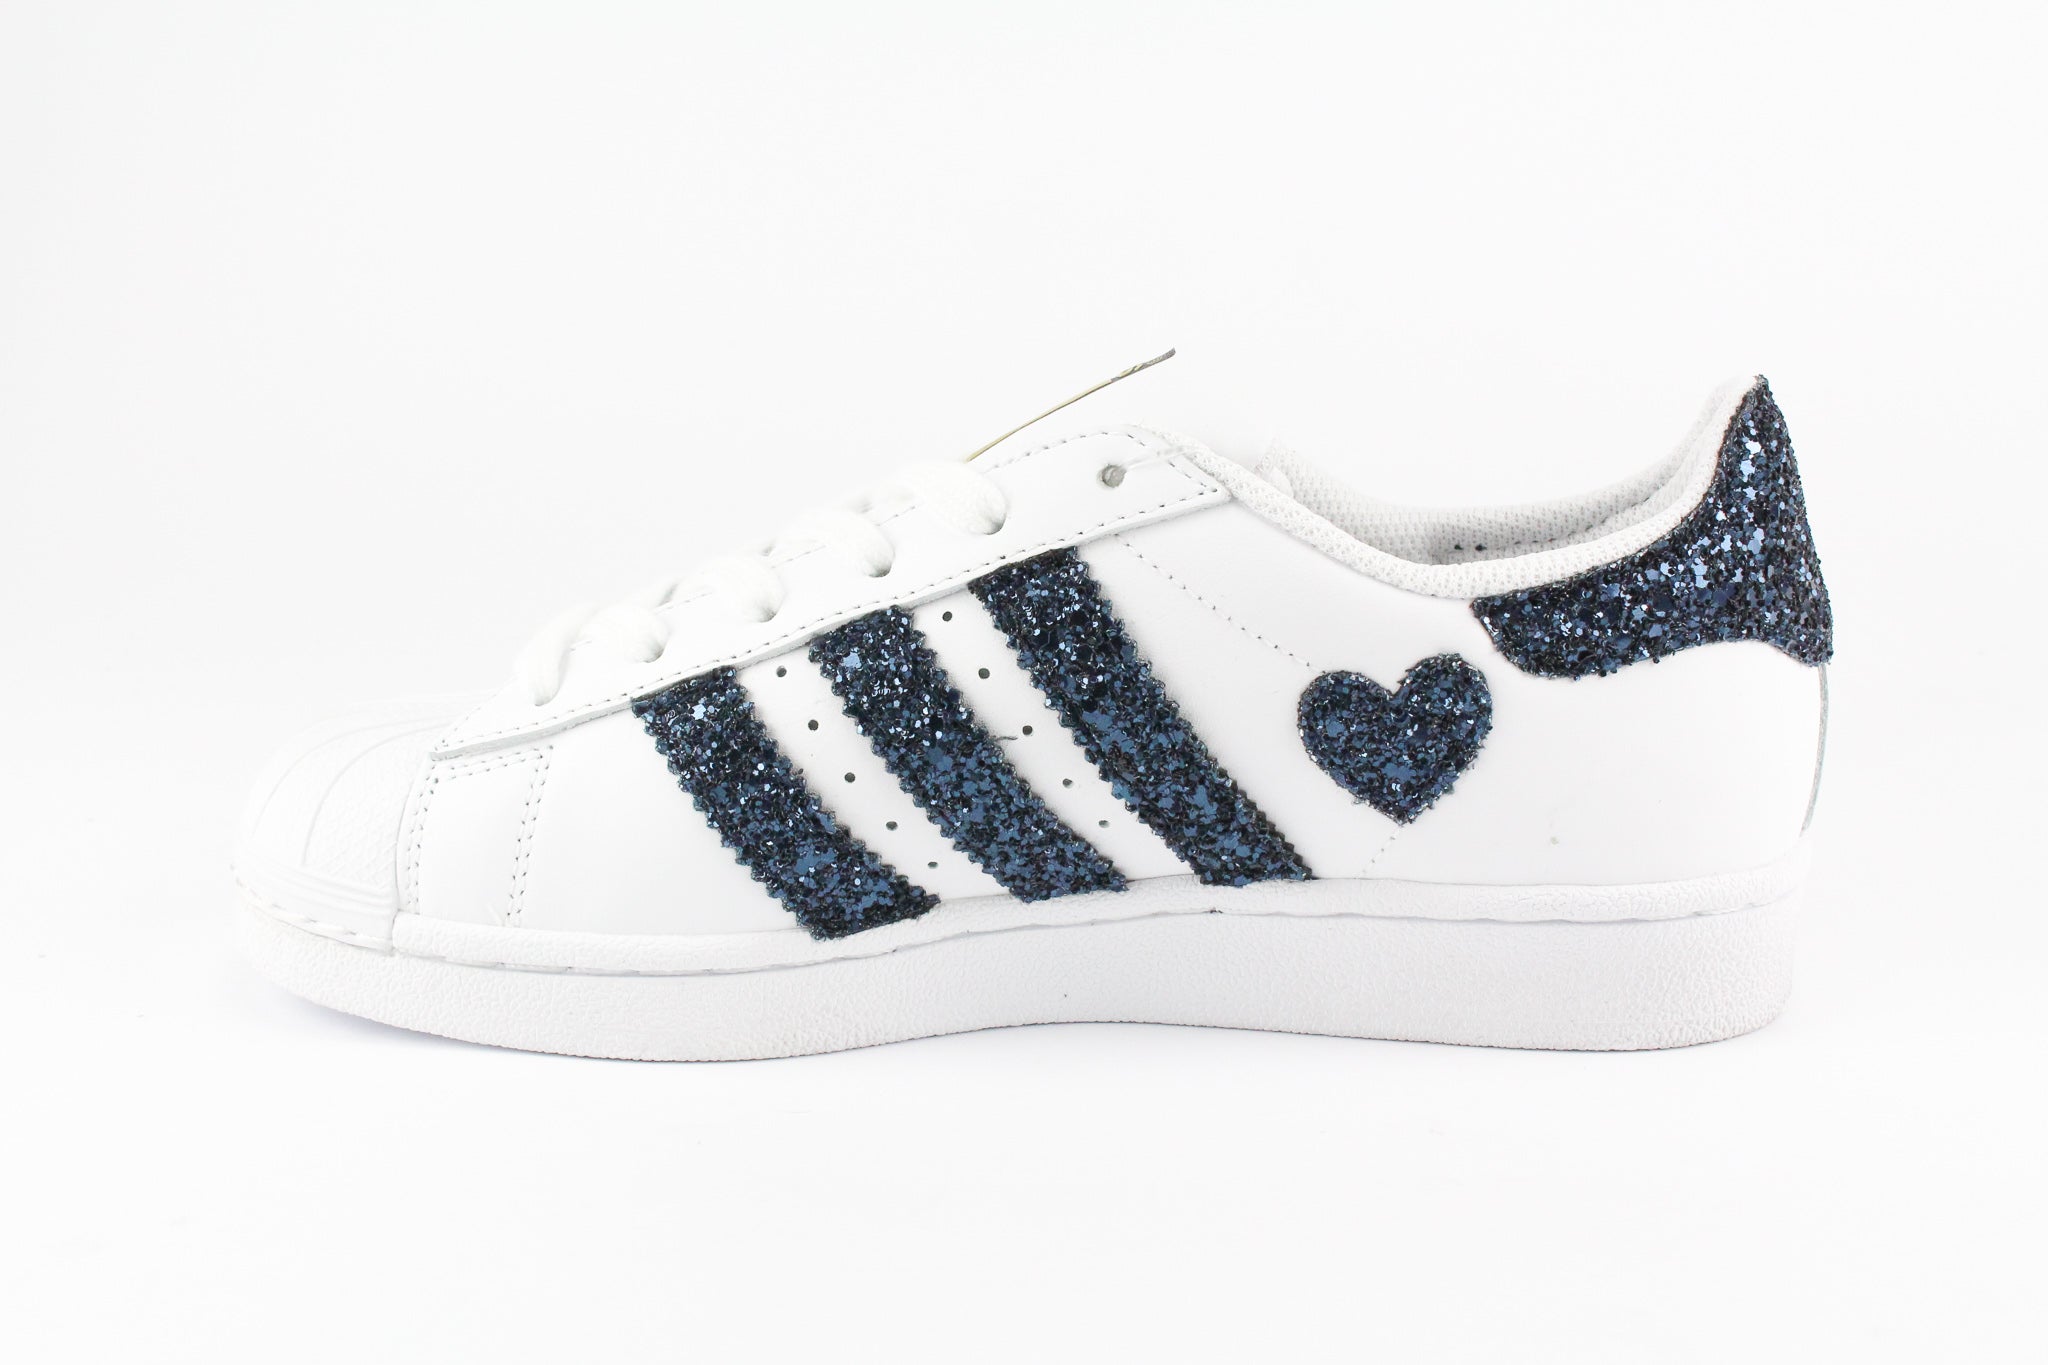 Adidas Superstar Cuori Navy Glitter